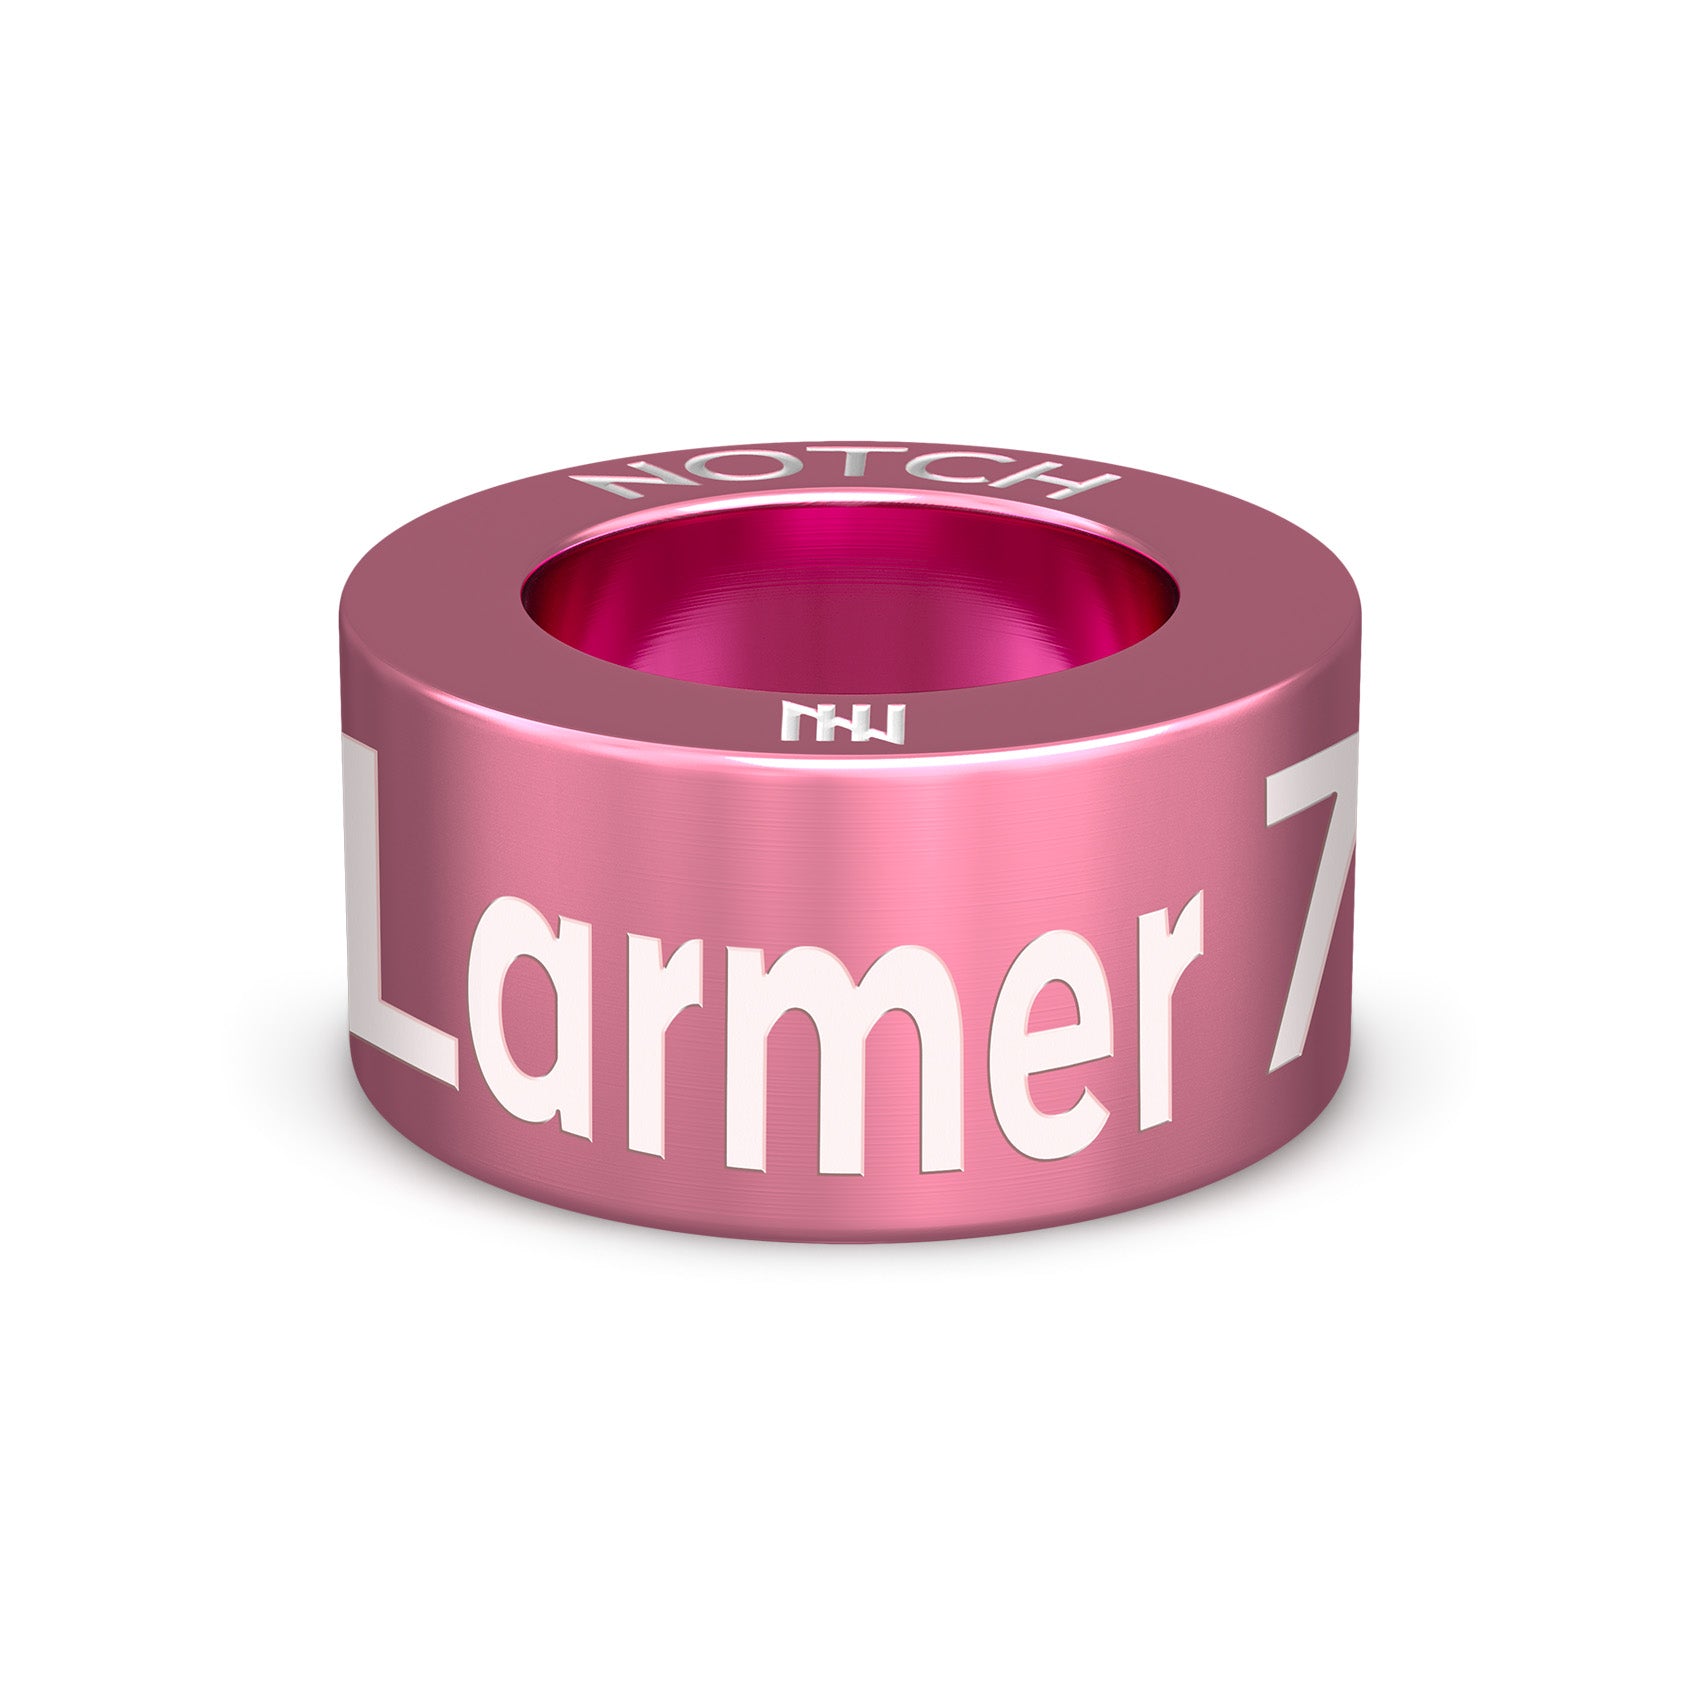 Larmer 7 mile NOTCH Charm